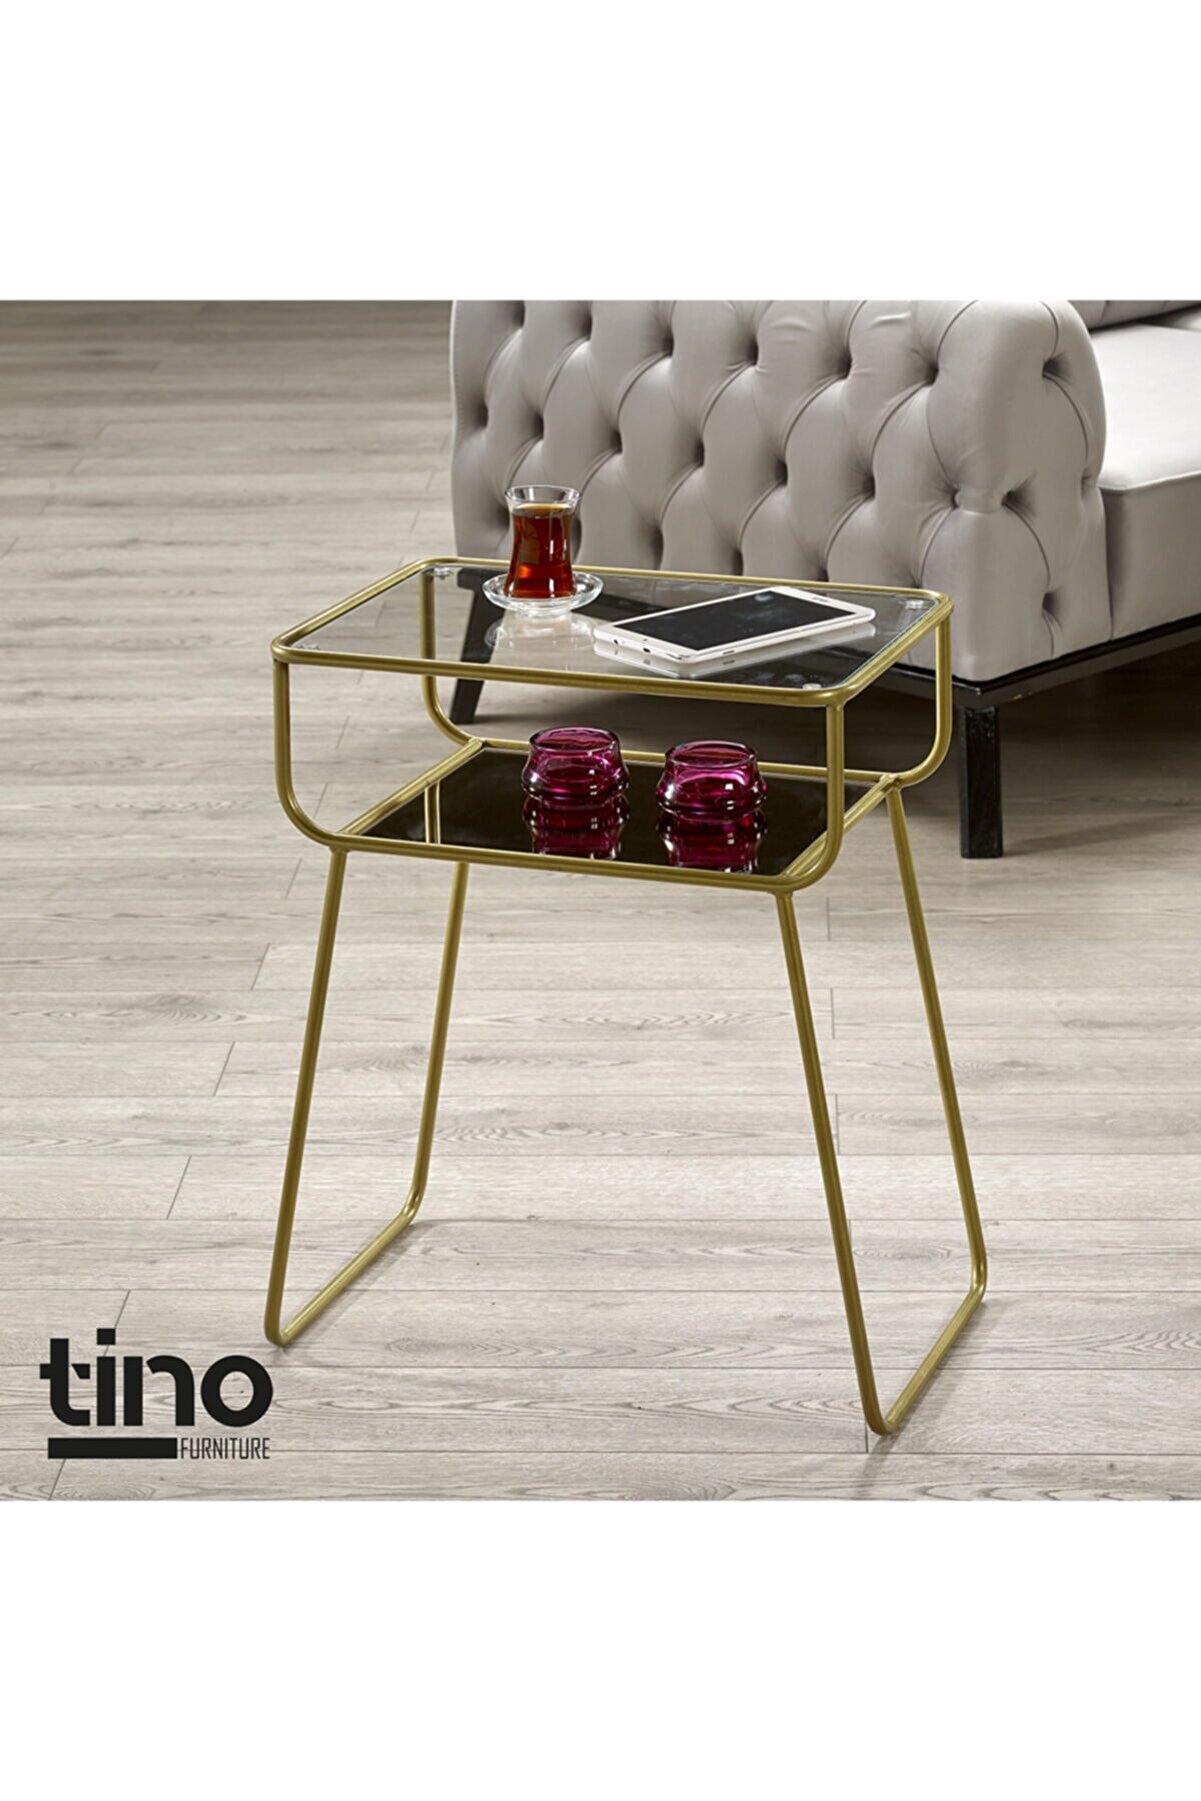 tino furniture Gold Yan Sehpa Cam Raflı Metal Geyik Sehpa